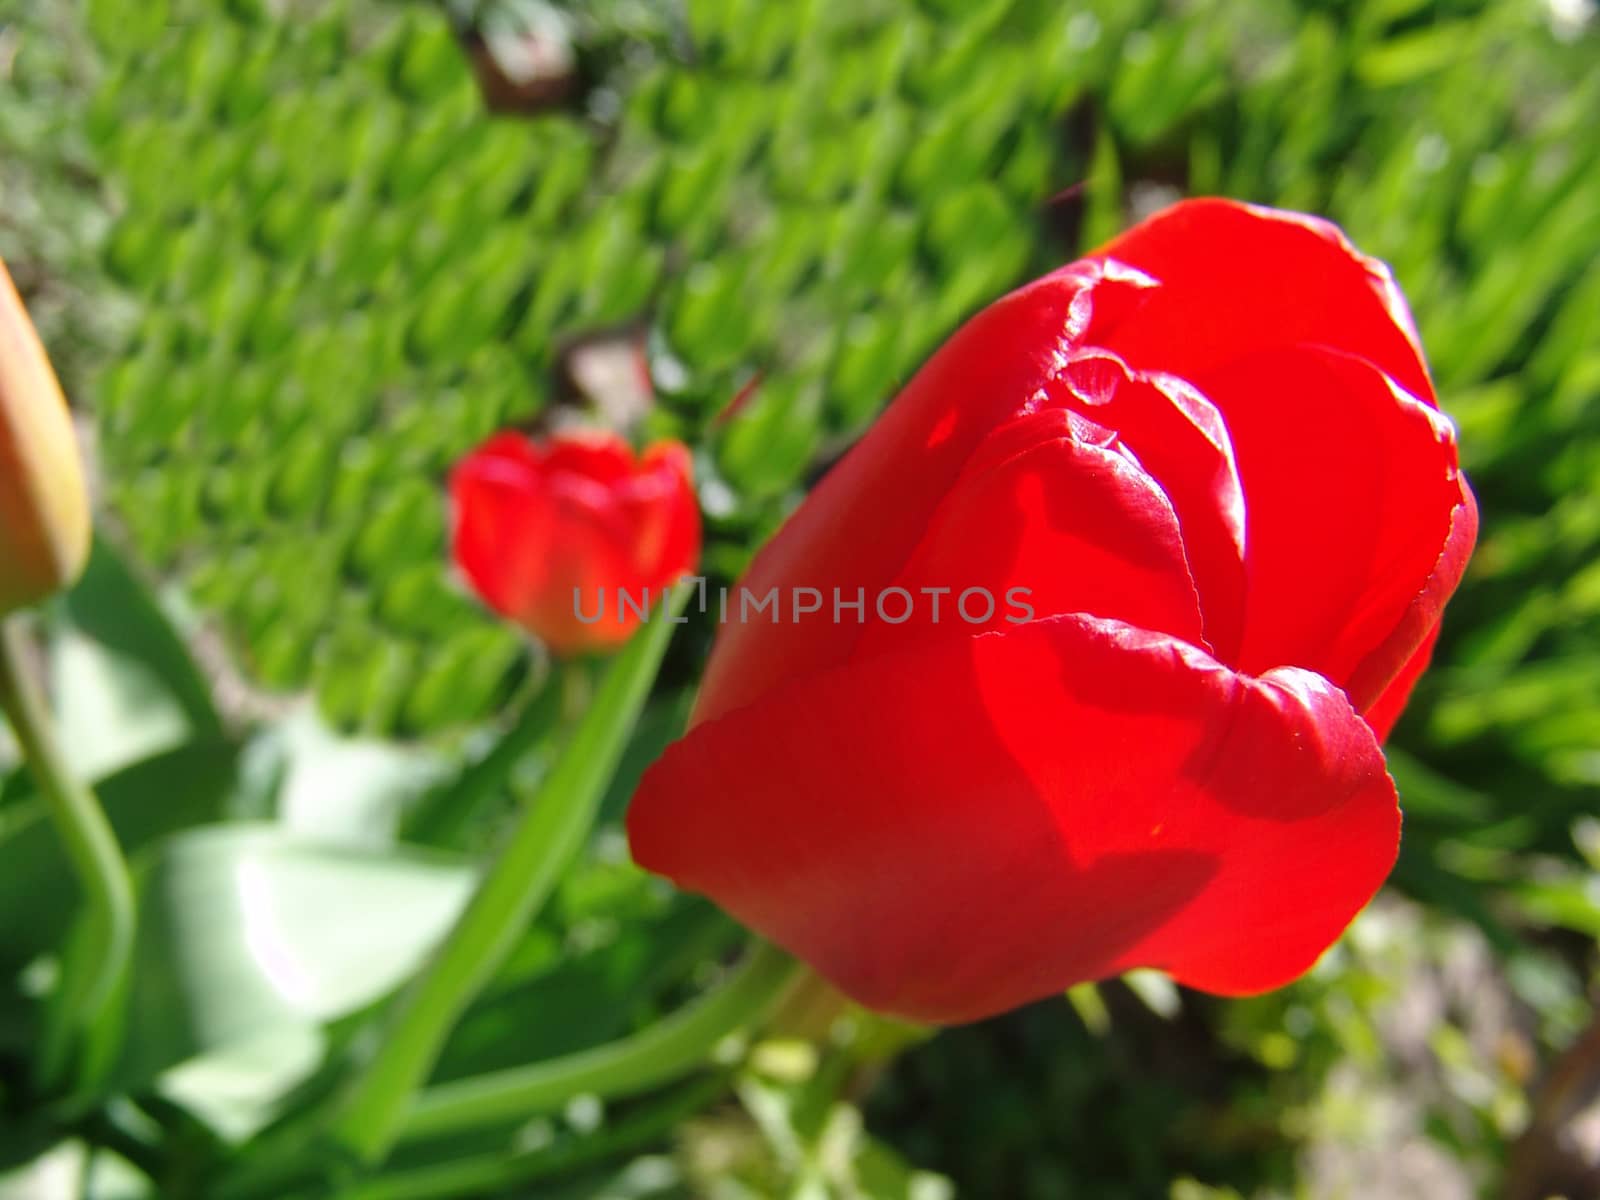 Fresh tulips in warm sun light